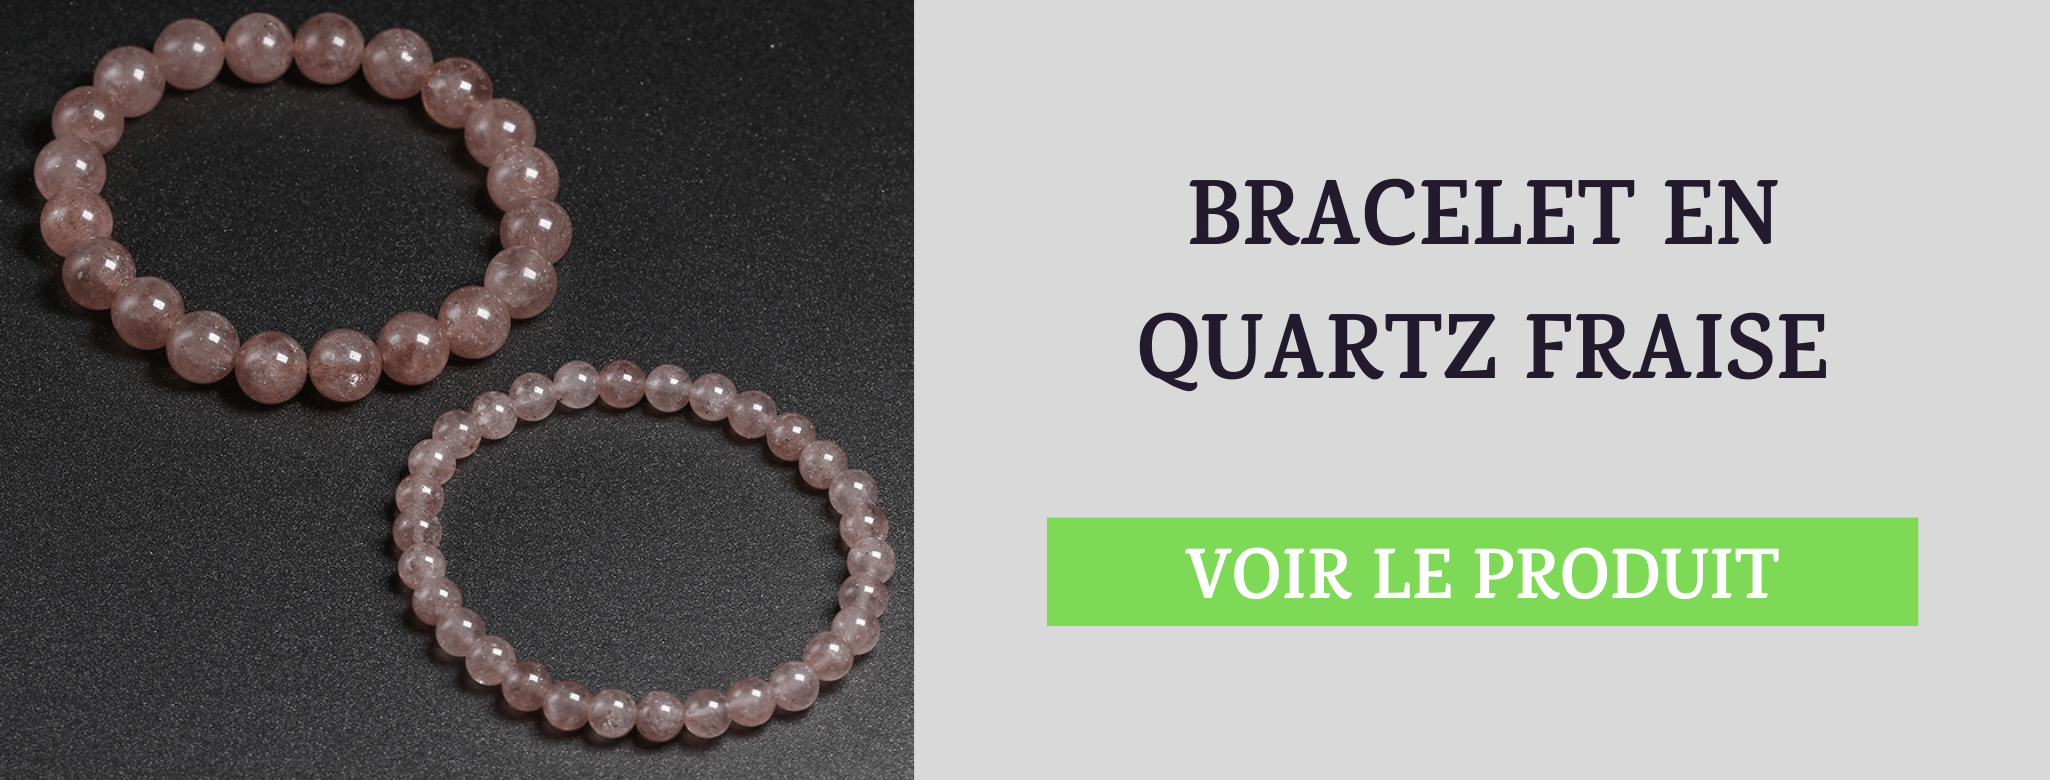 Bracelet Quartz Fraise